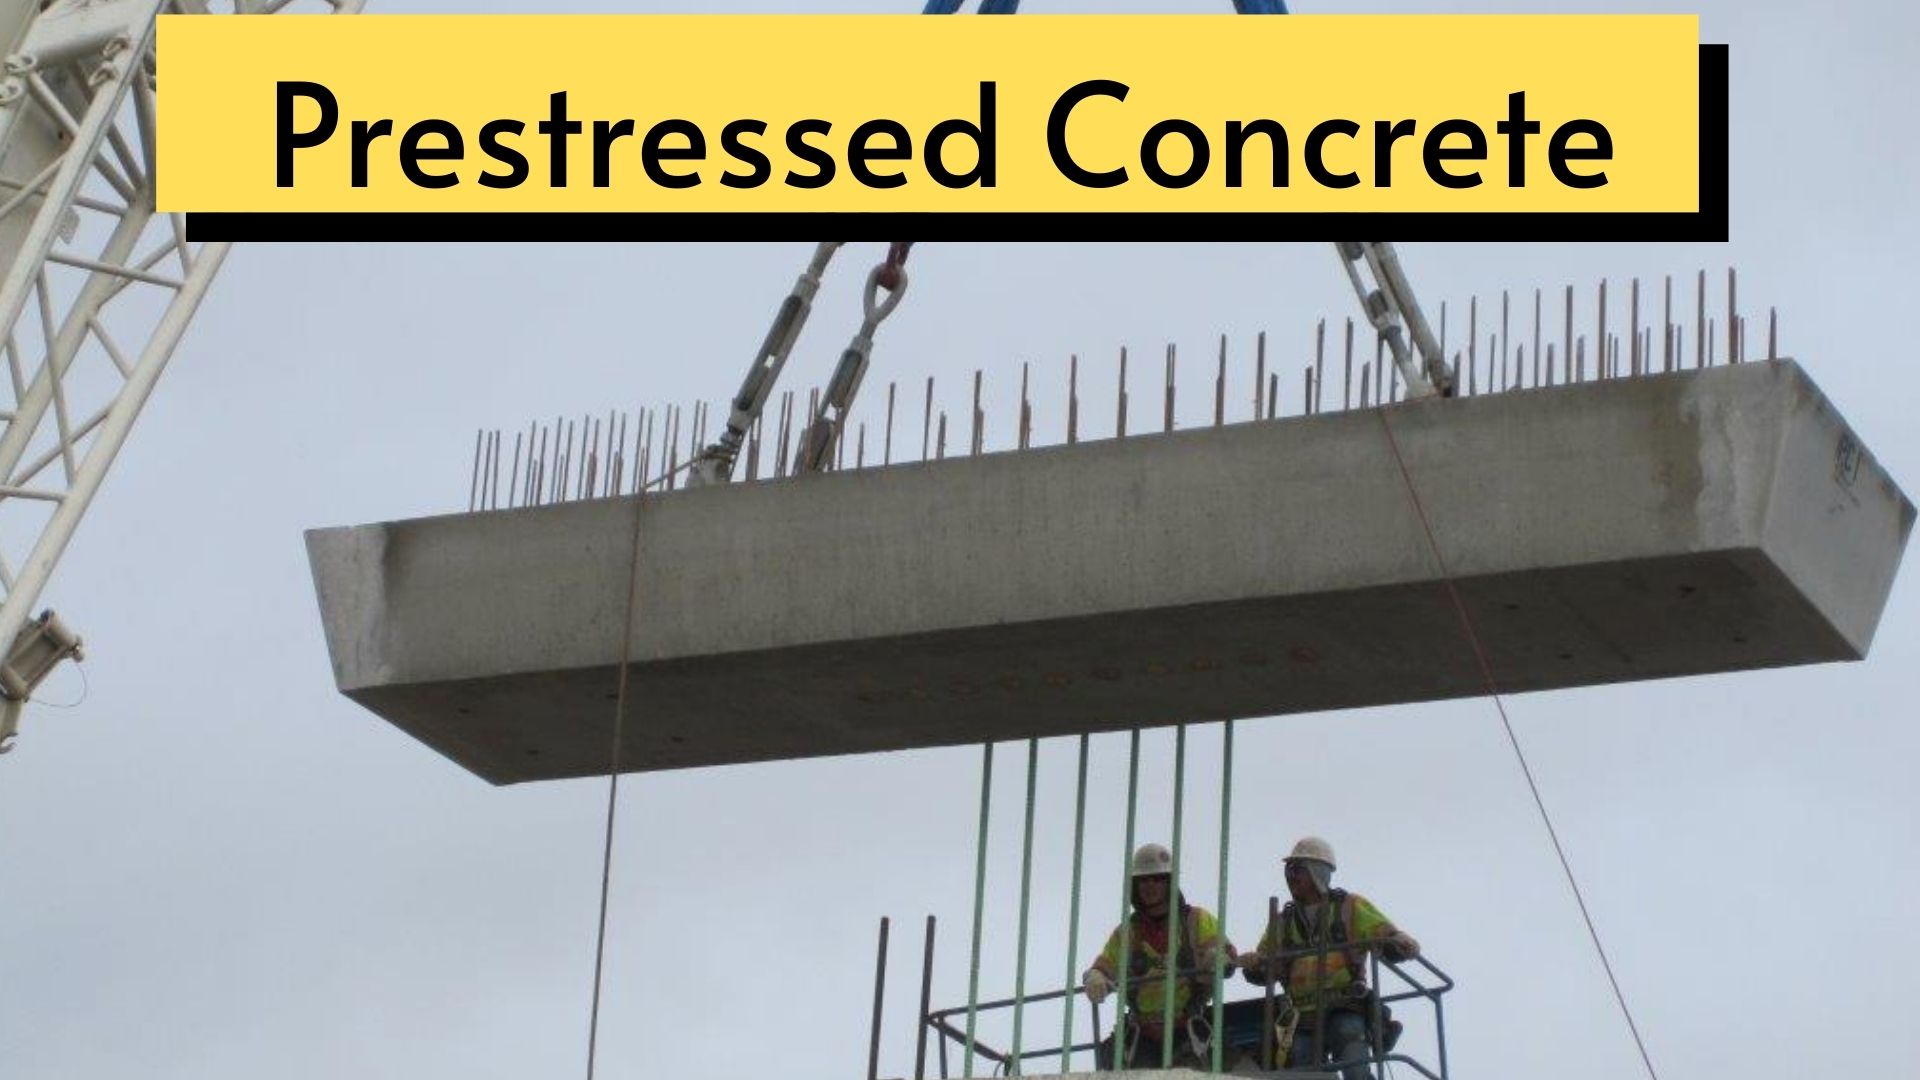 disadvantages of precast concrete